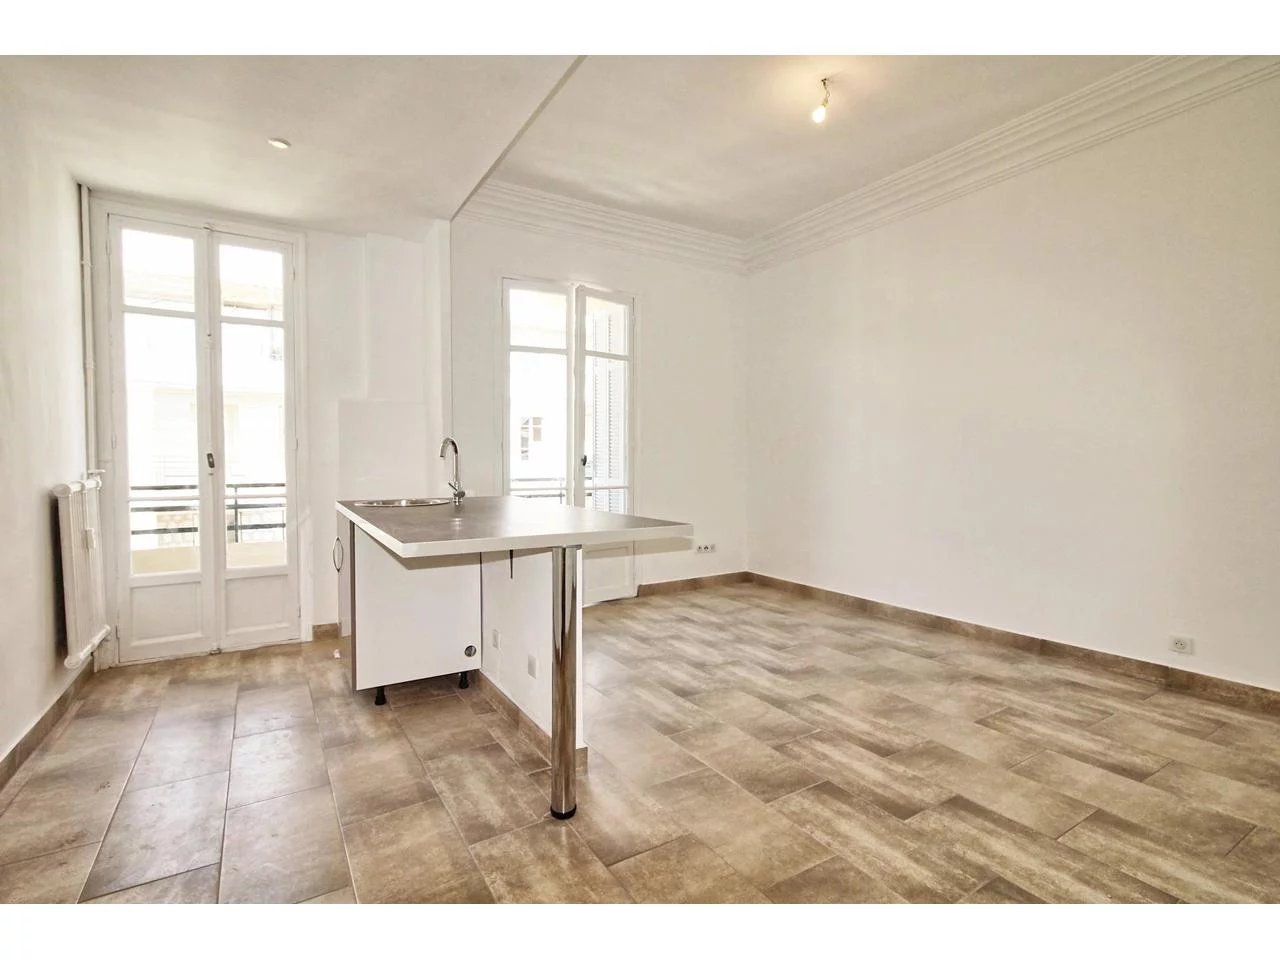 Appartement  1 Locali 24.63m2  In vendita   155 000 €